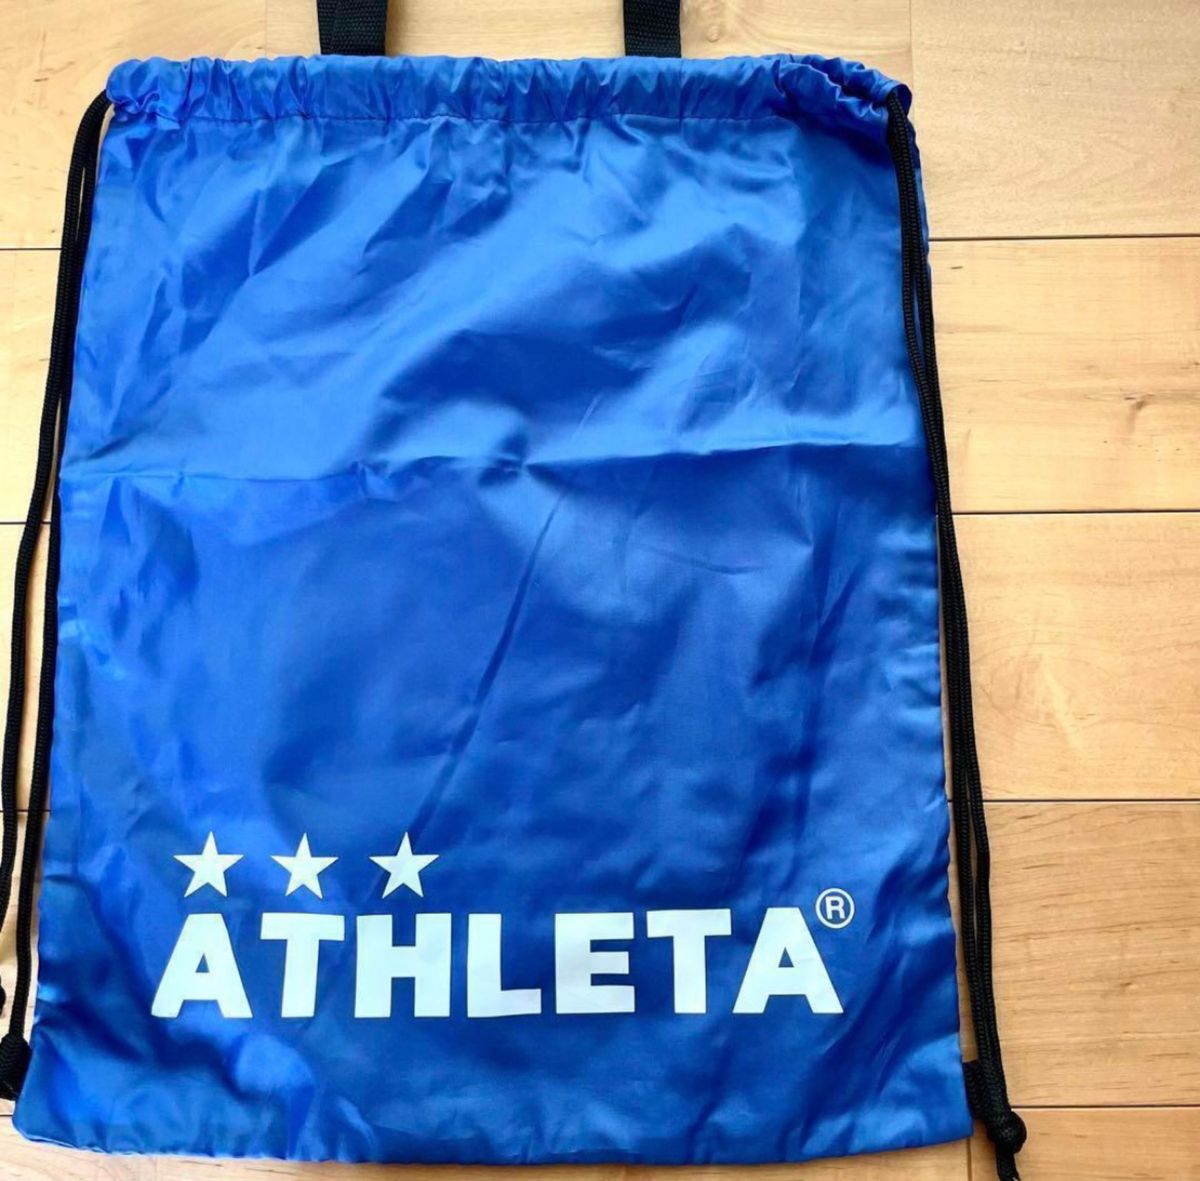 ATHLETA アスレタマルチバッグ/ランドリーバッグ袋ナップサックブルー青色サッカーフットサルリュック